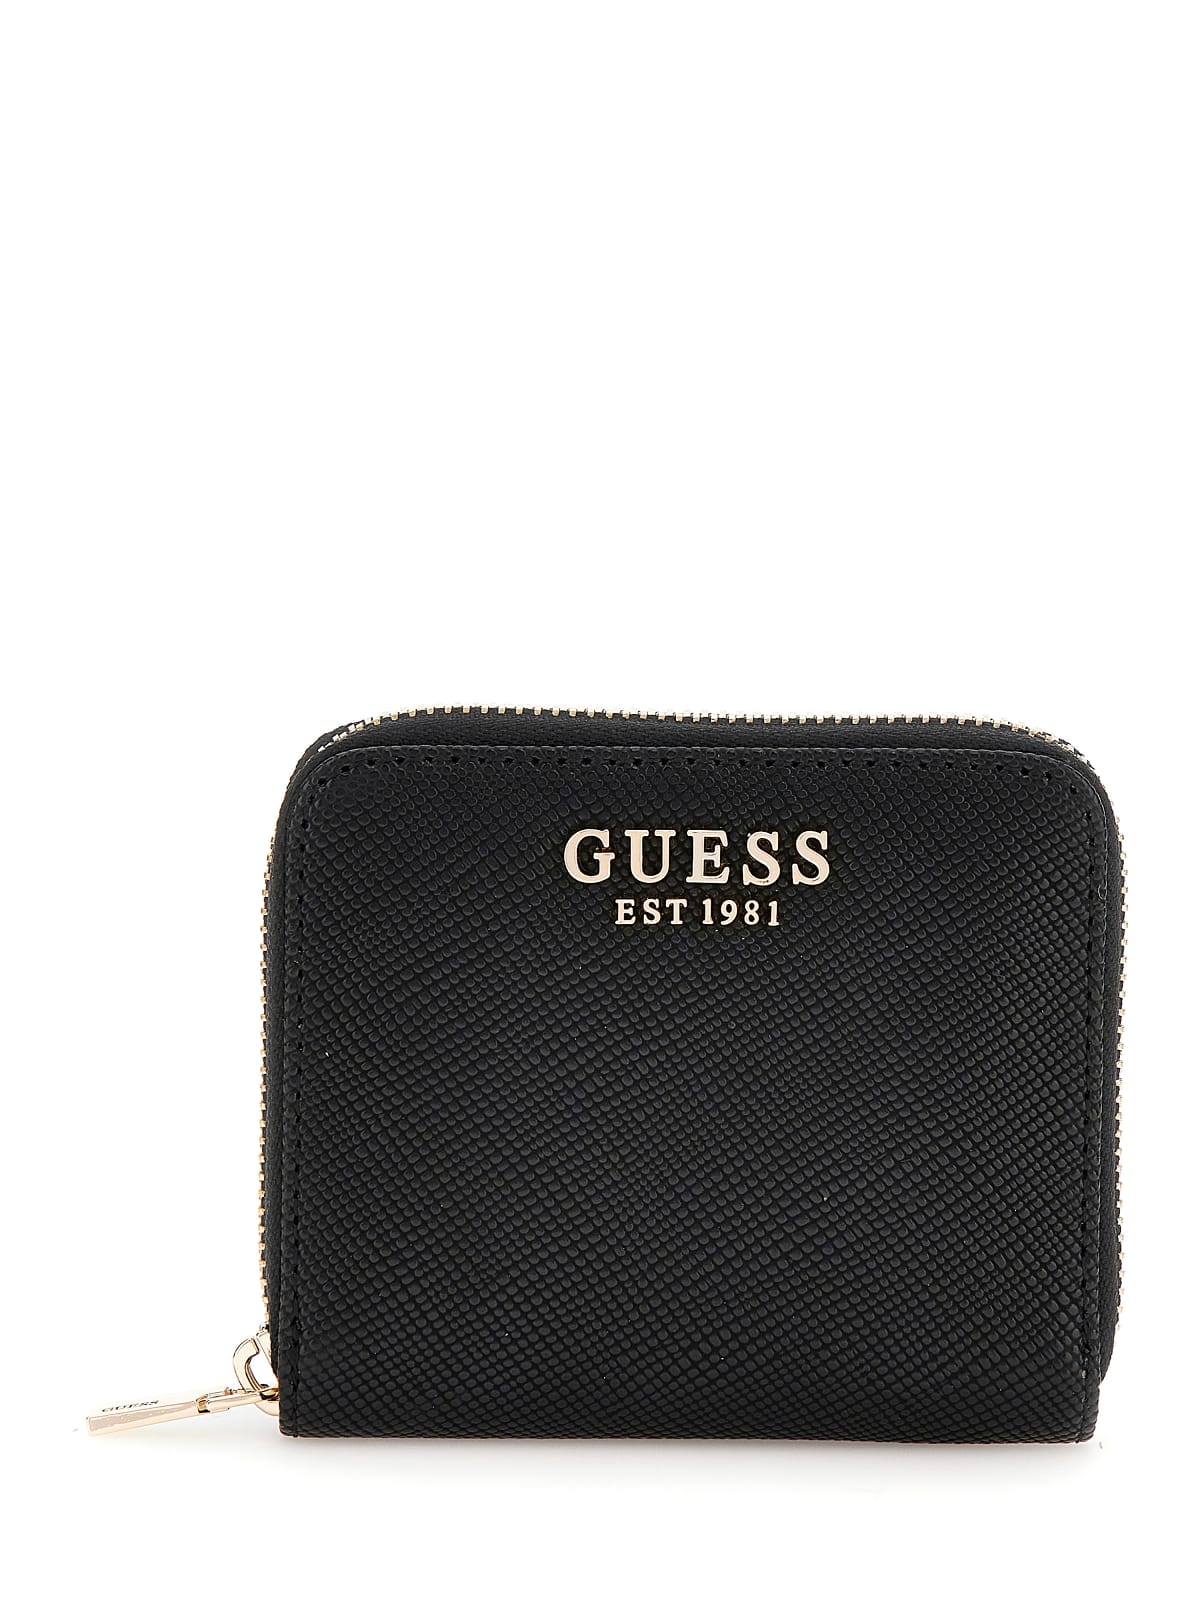 Brand New Guess mini purse/ baguette #metallic... - Depop